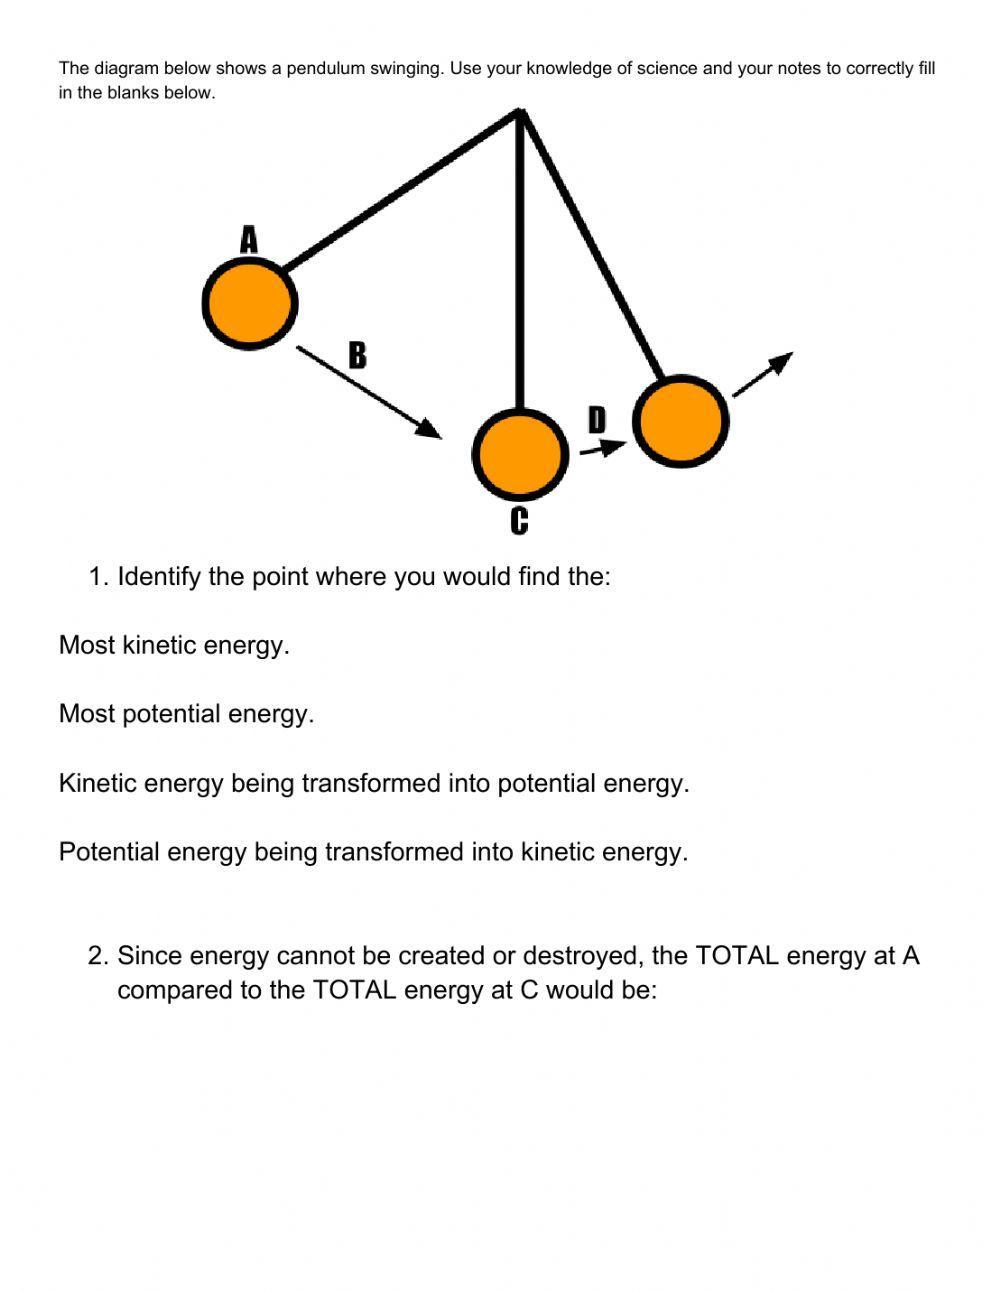 Pendulum energy transformations